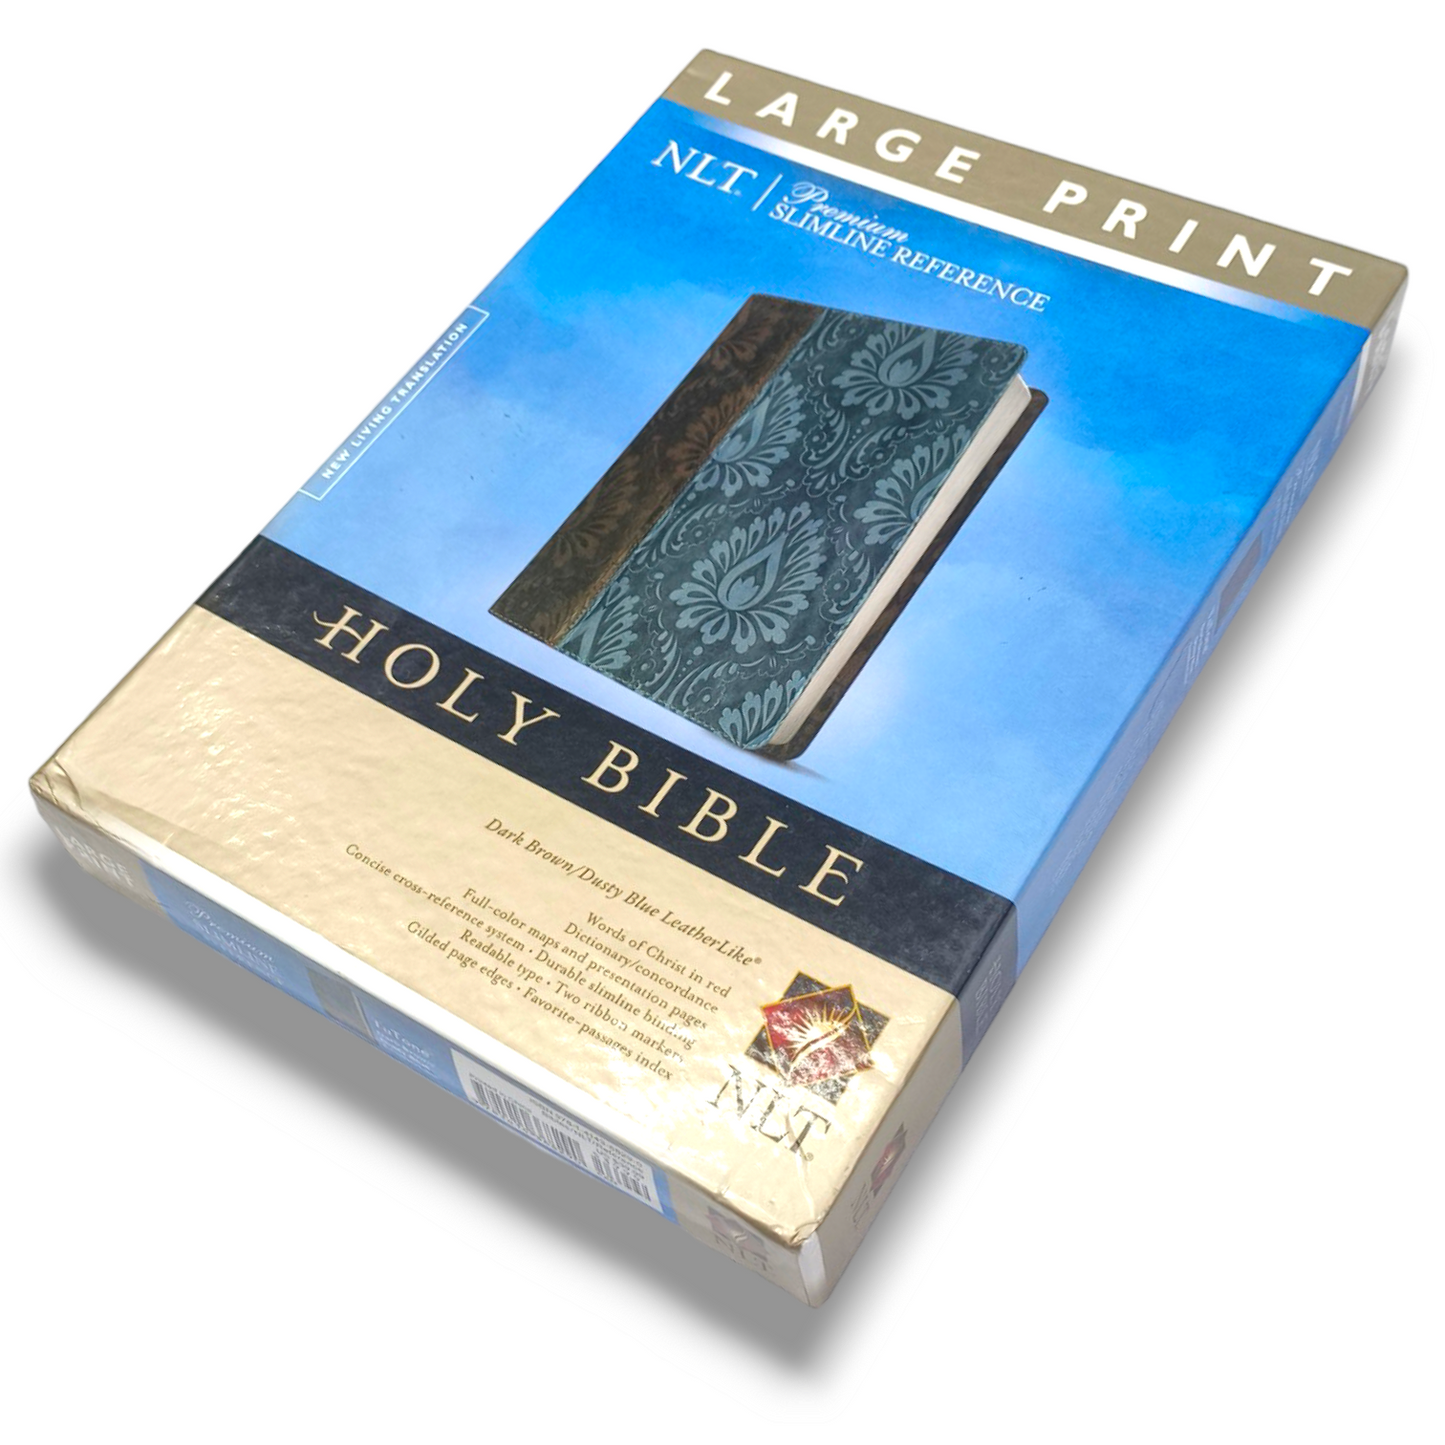 NLT Premium Slimline Reference Bible | Large Print | New Edition | Attractive Design Bound | Study Bible